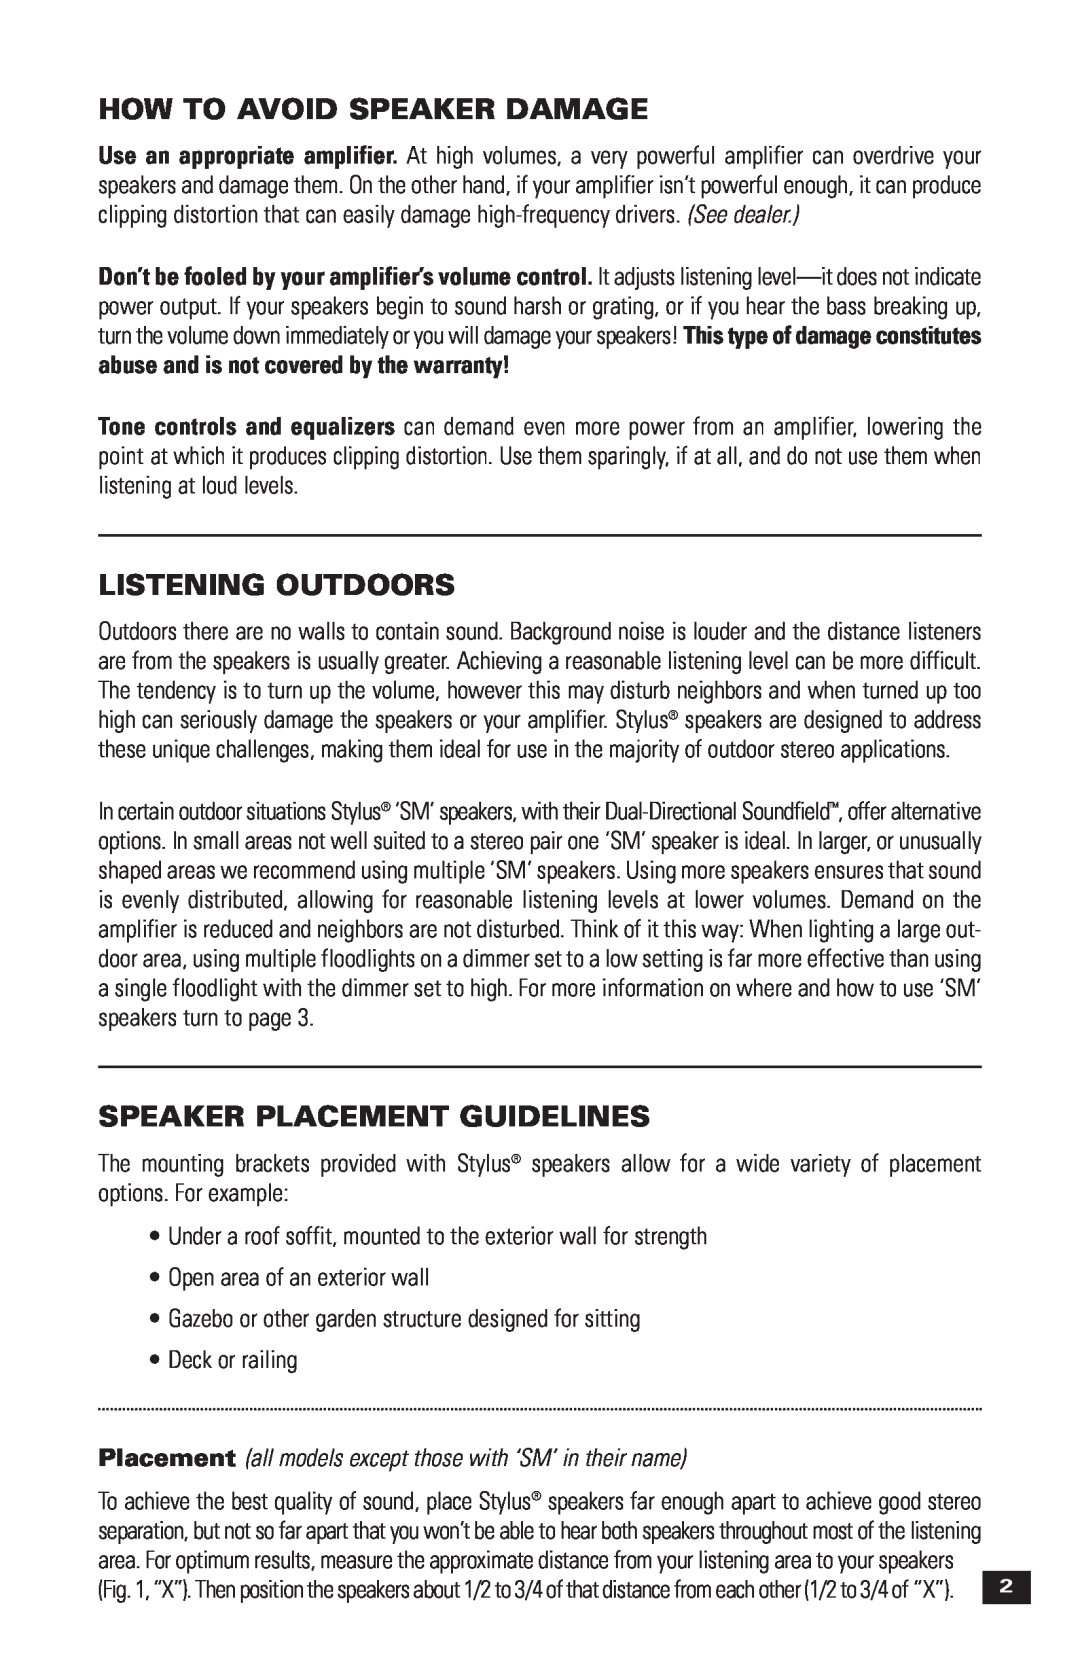 Paradigm Stylus Outdoor Speakers, 270, OM-121 How To Avoid Speaker Damage, Listening Outdoors, Speaker Placement Guidelines 